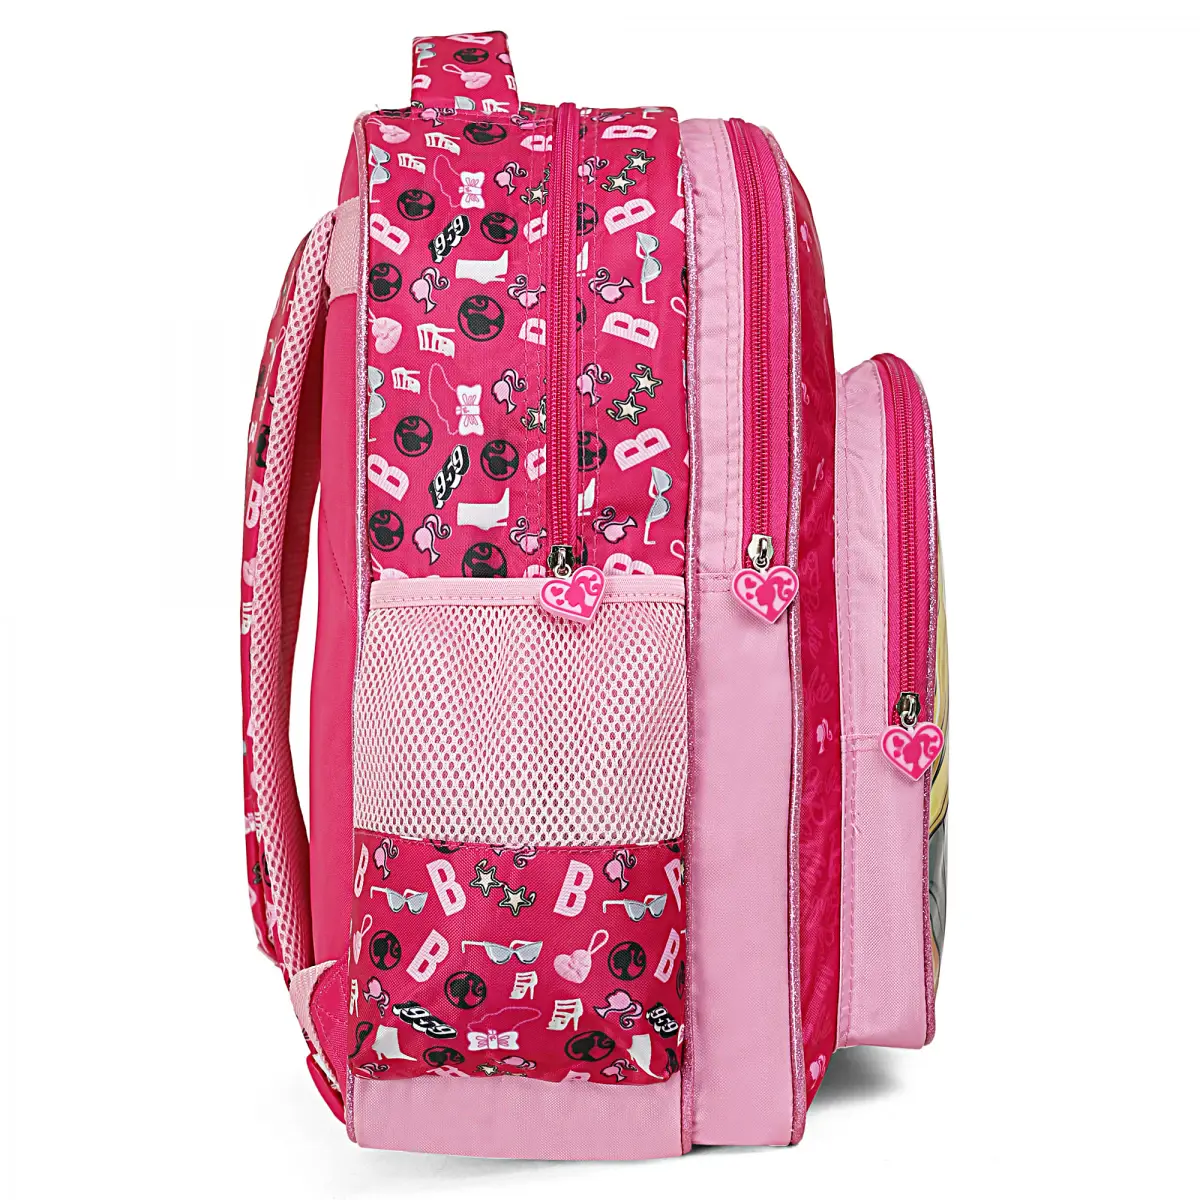 Barbie Beautiful School Bag Pack, Pink, 12Inches, 16Y+